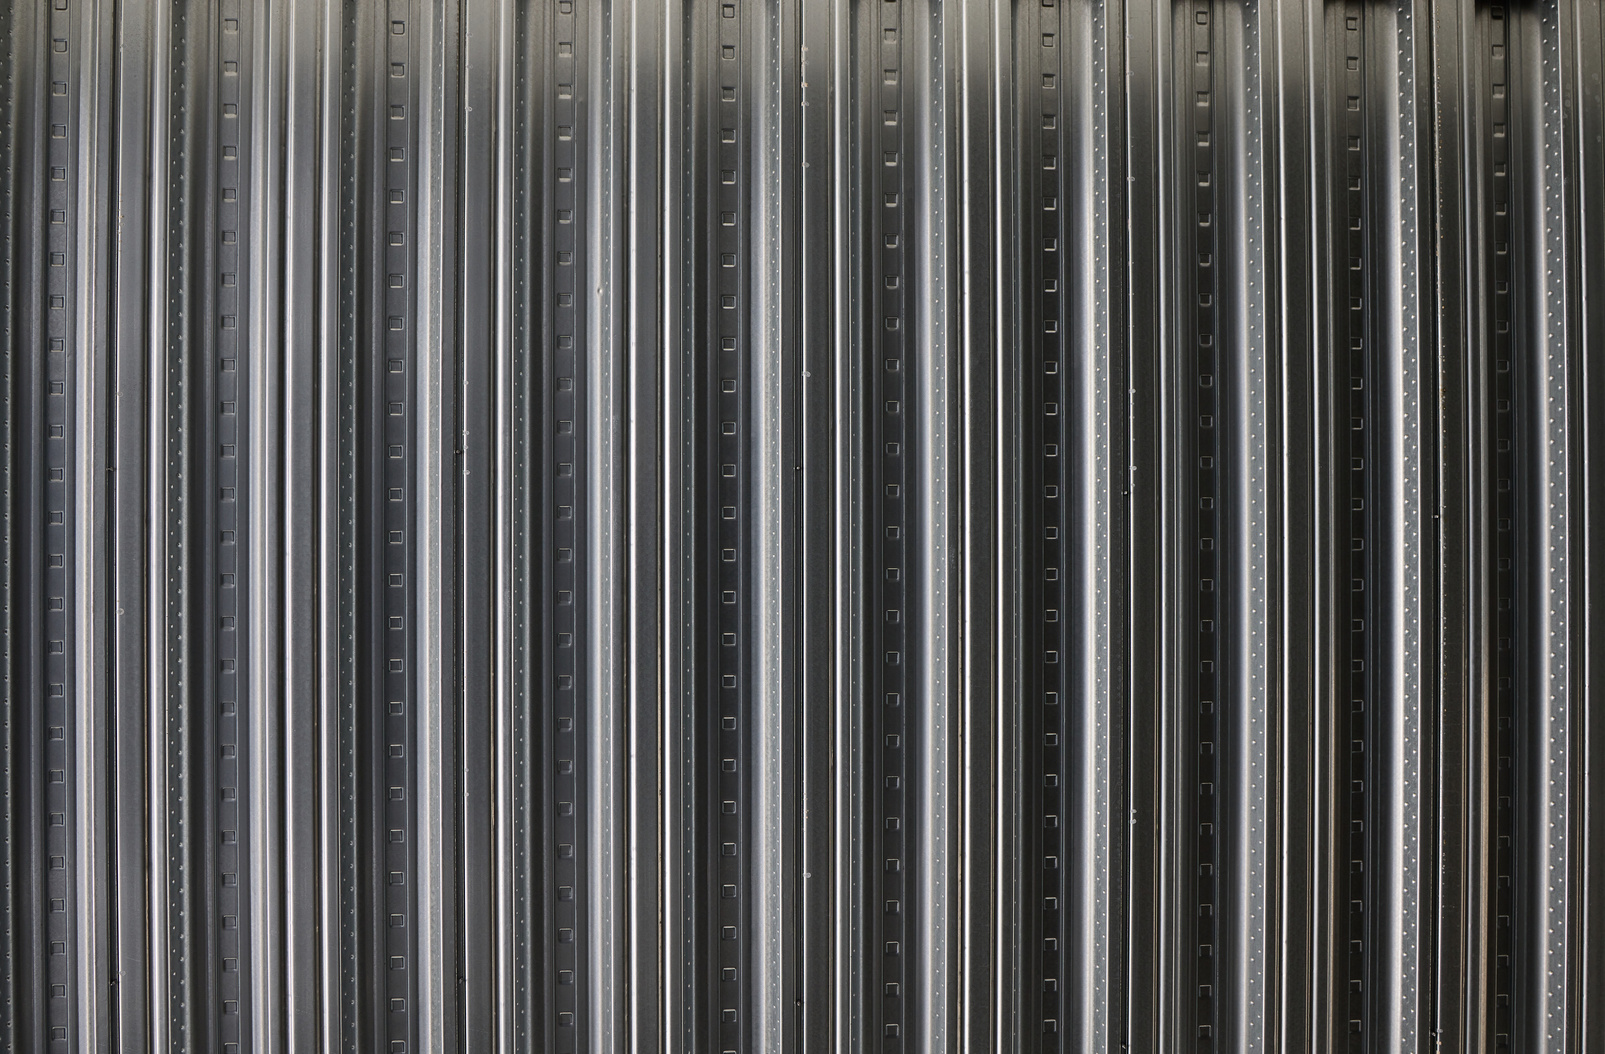 Composite metal floor galvanized steel decking viewed from under